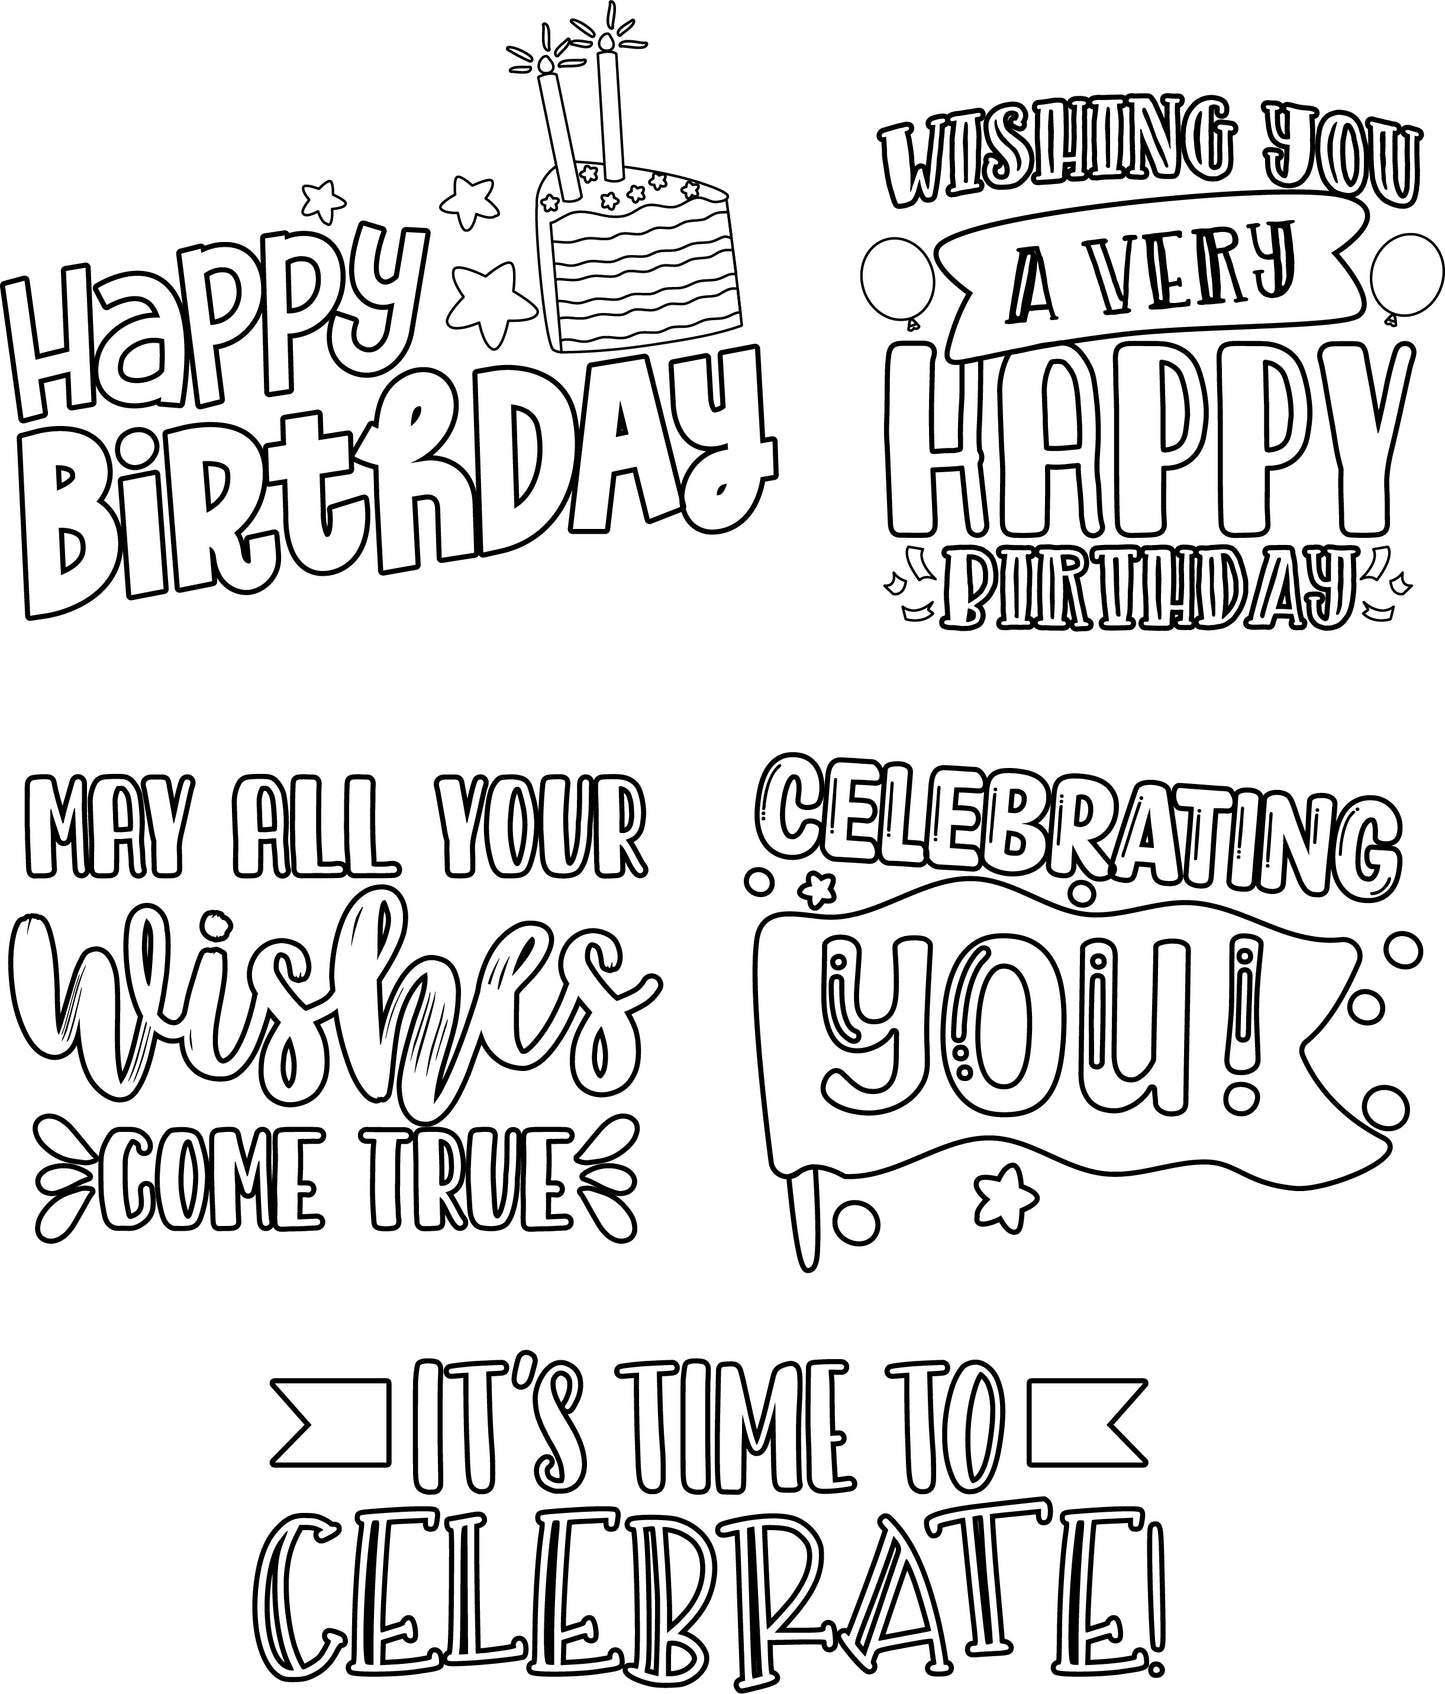 Print & Color Birthday Phrases (B&W)